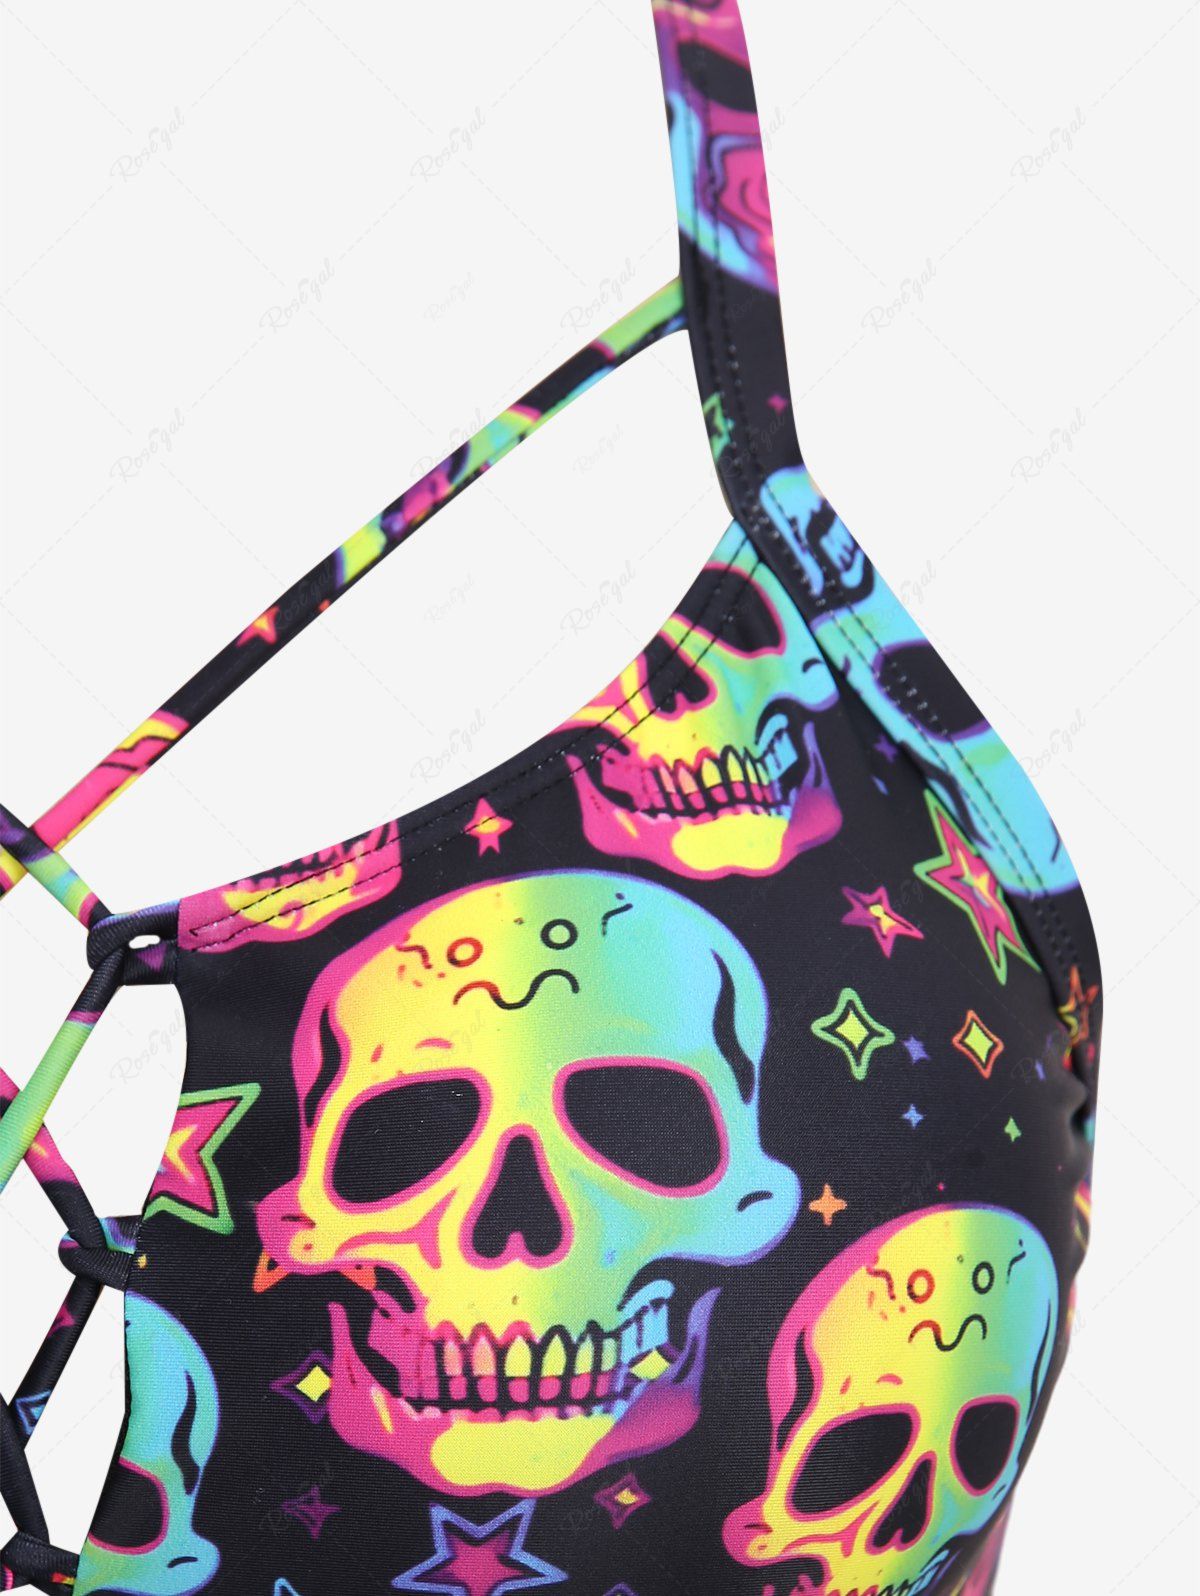 Gothic Ombre Colorful Skulls Stars Print Crisscross Strappy Bikini Set(Adjustable Shoulder Strap)